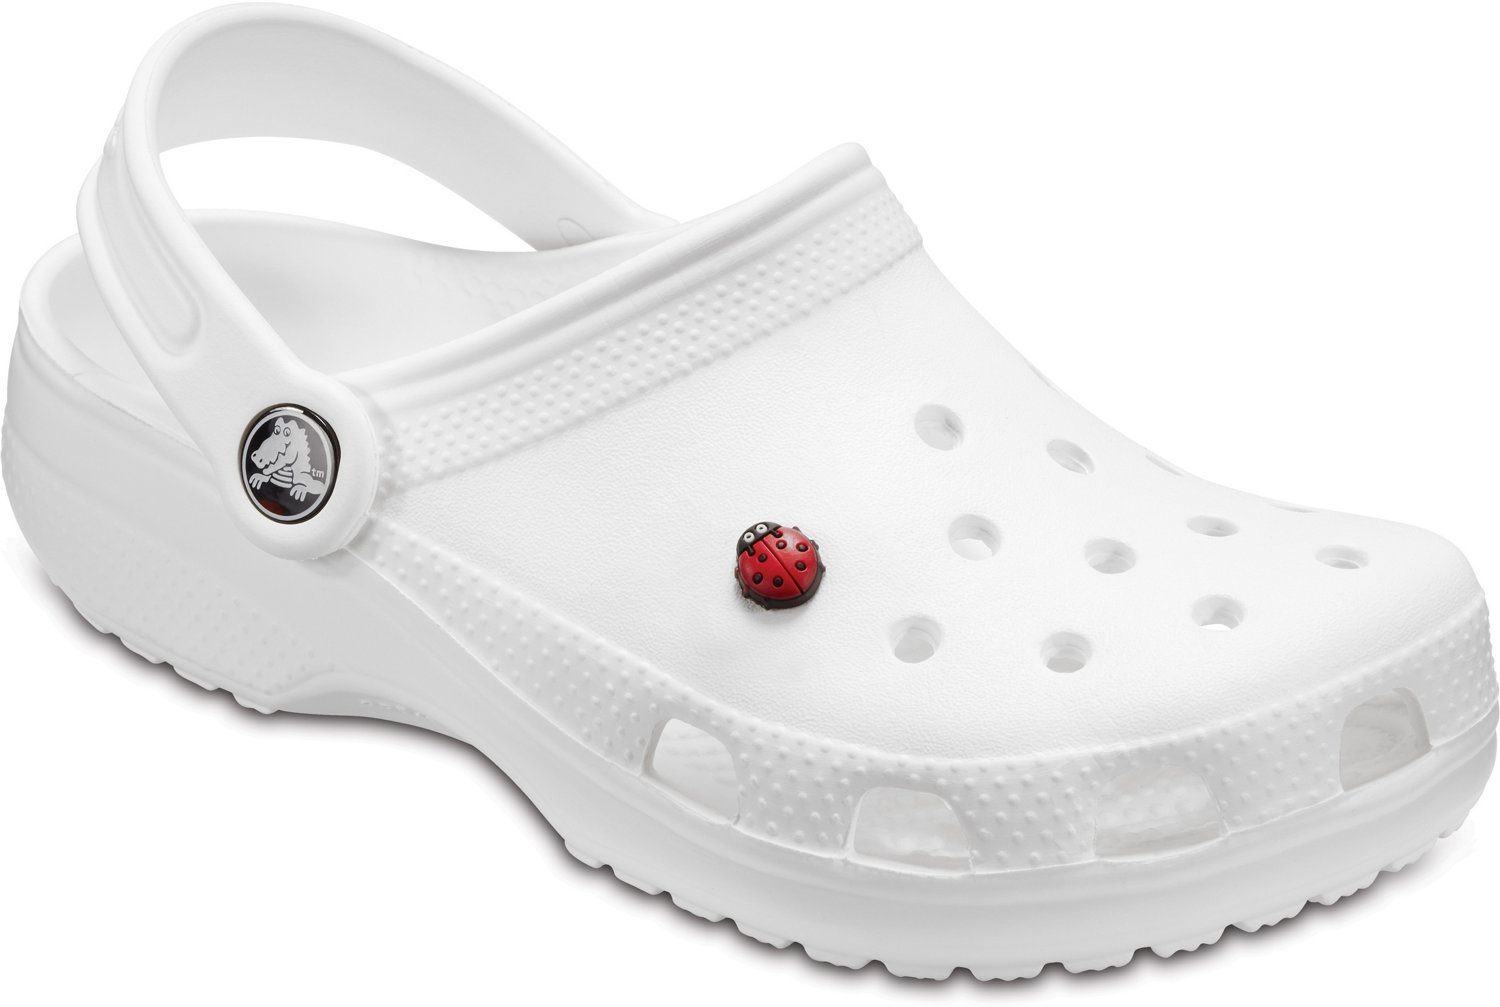 academy sports crocs shoes